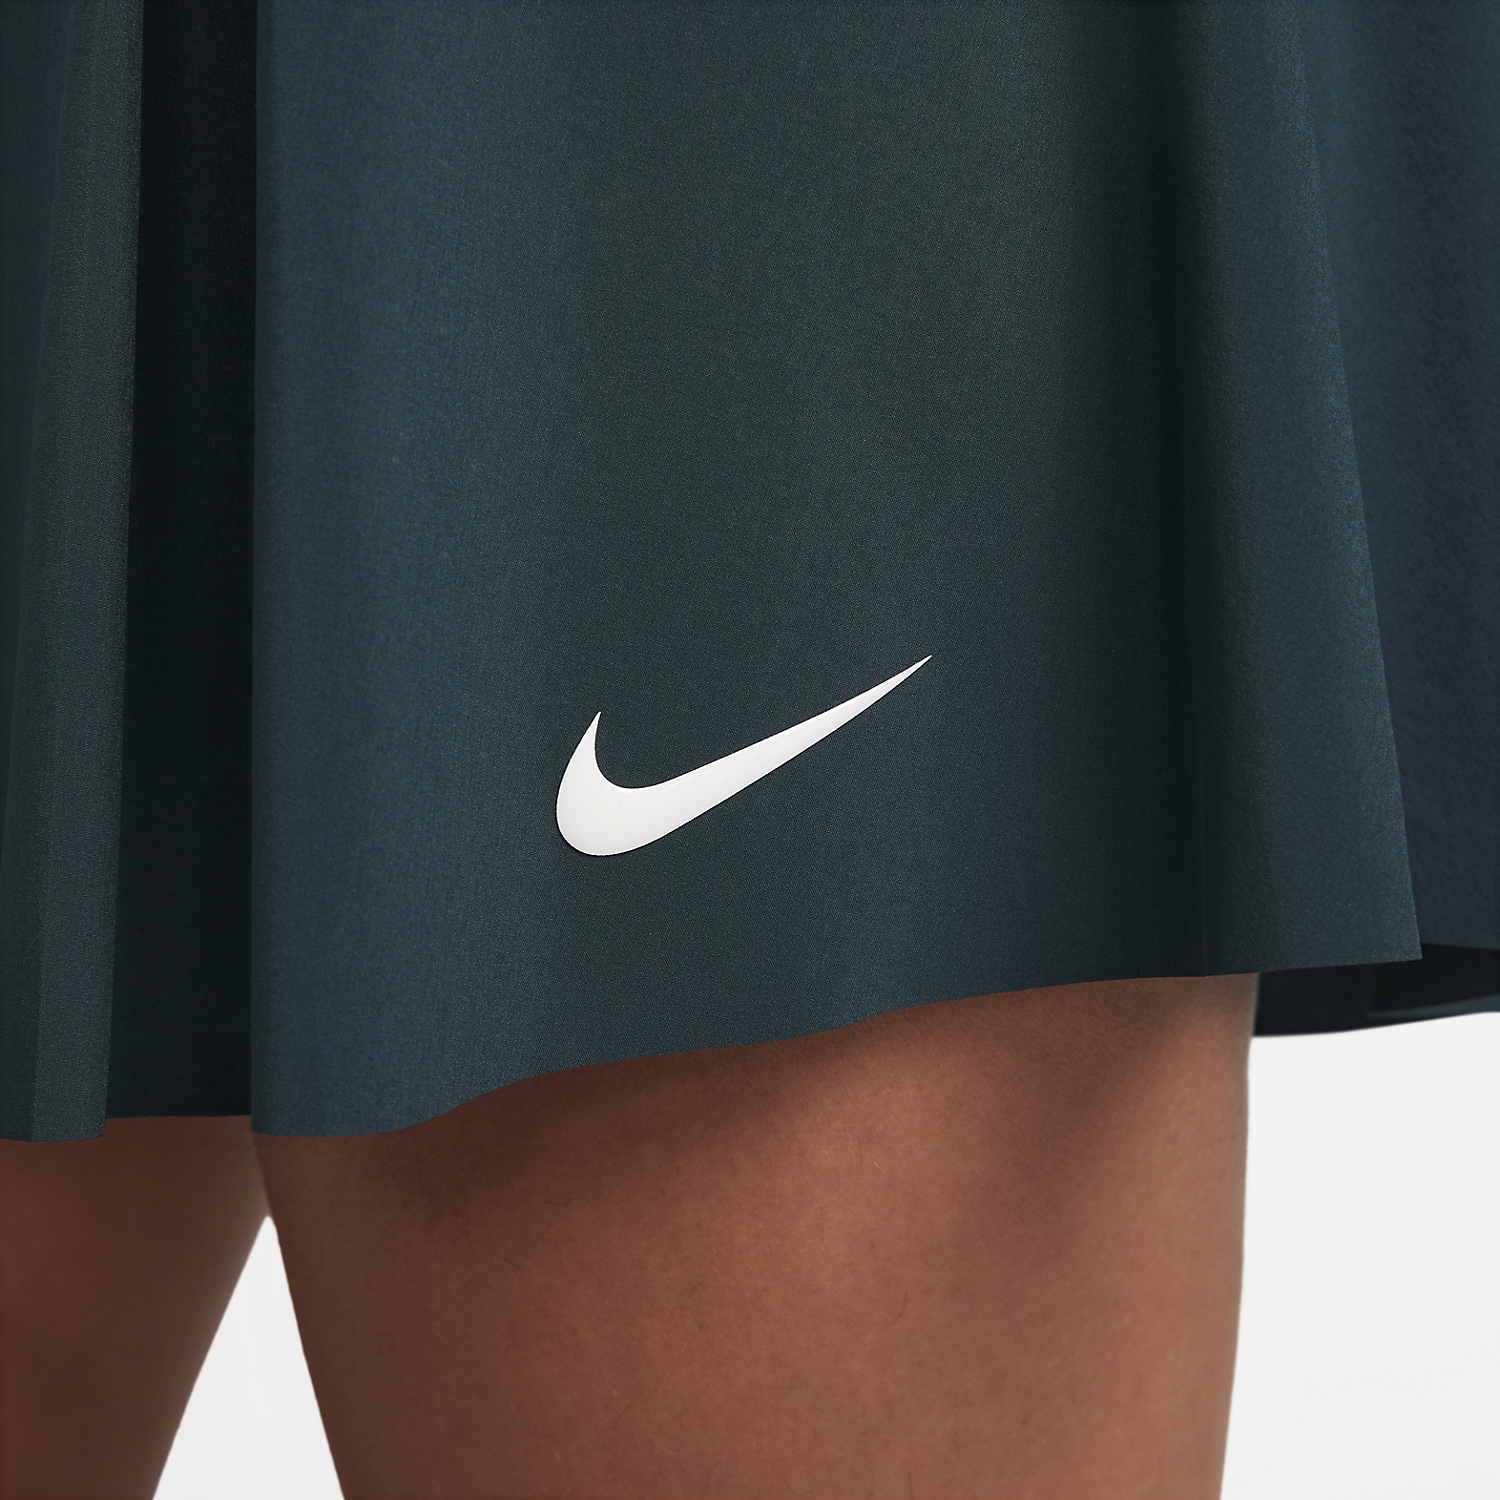 Nike Dri-FIT Advantage Skirt - Deep Jungle/White